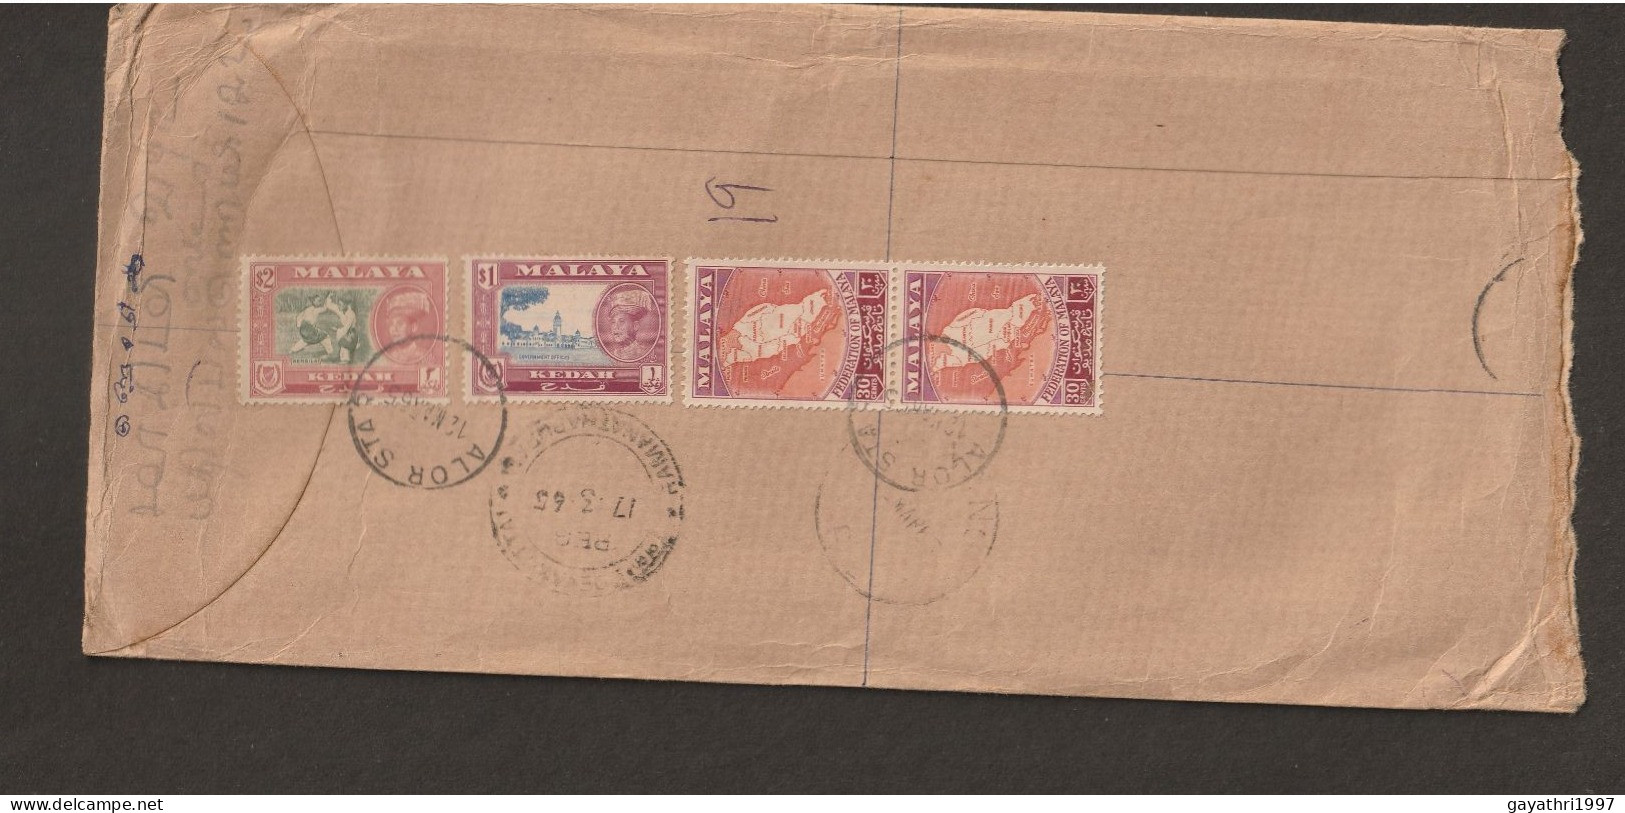 Malaya 1963 Malaya Stamp And Kedah Stamp  Used From Malaya To India Long Cover High Value Stamp(L16) - Kedah